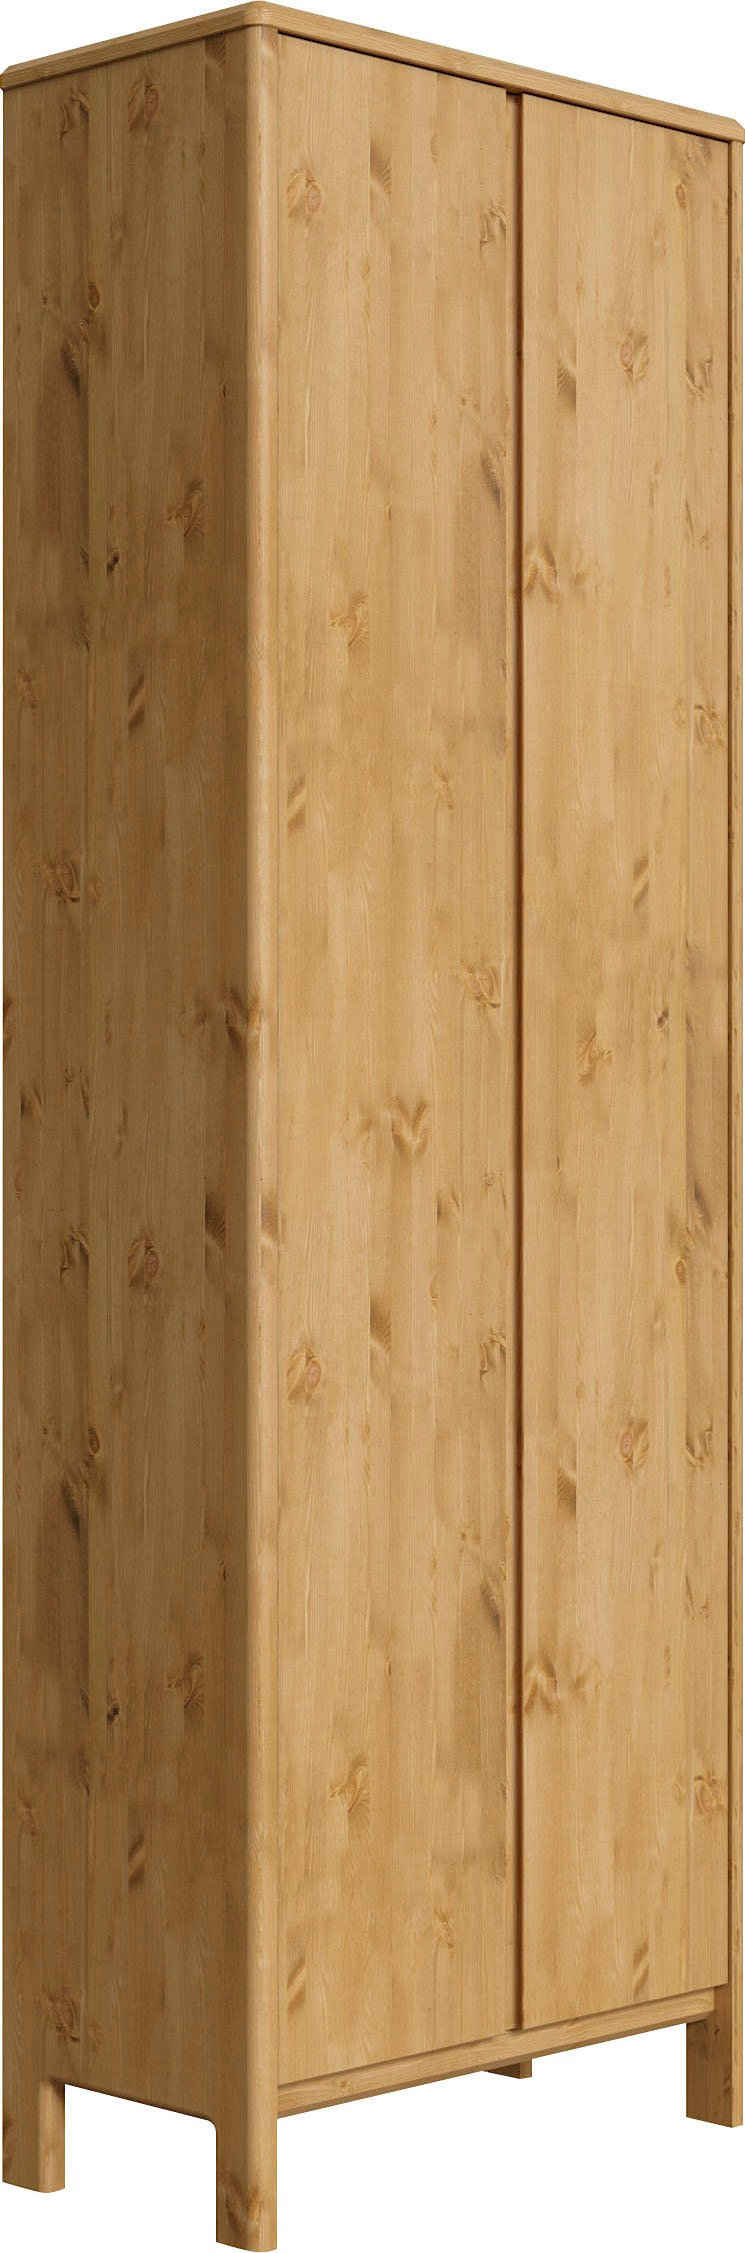 Home affaire Garderobenschrank Luven zertifiziertes Massivholz, Höhe 192 cm